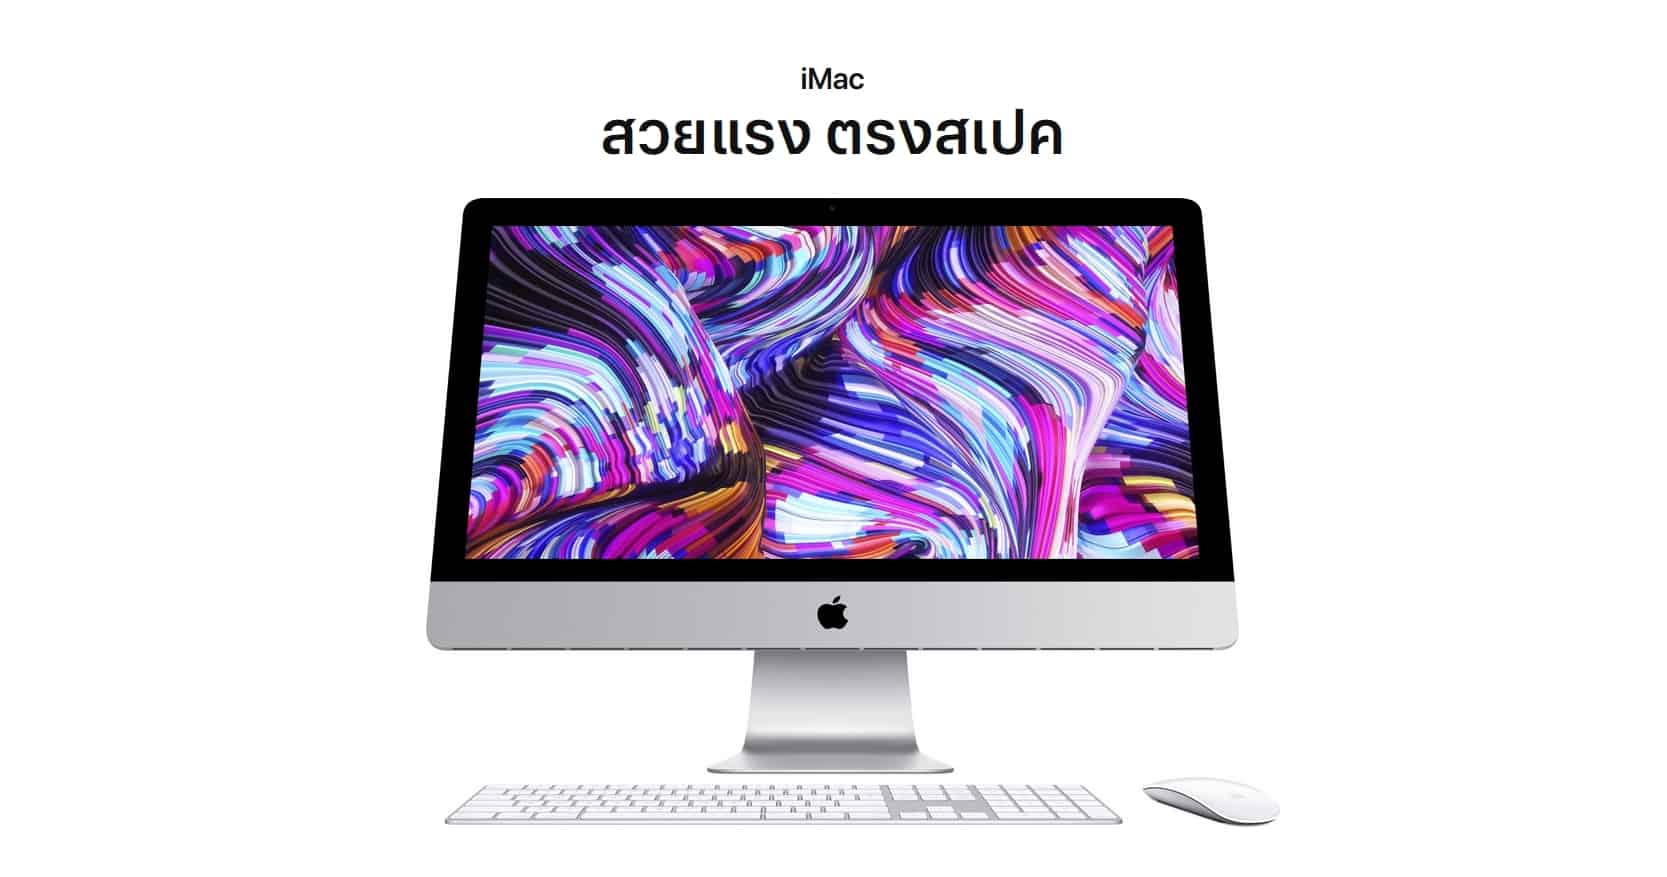 Apple เปิดตัว iMac รุ่นใหม่ในรอบ 2 ปี ใช้ Intel คู่กับ AMD ราคาเริ่มต้น 44,900 บาท 1